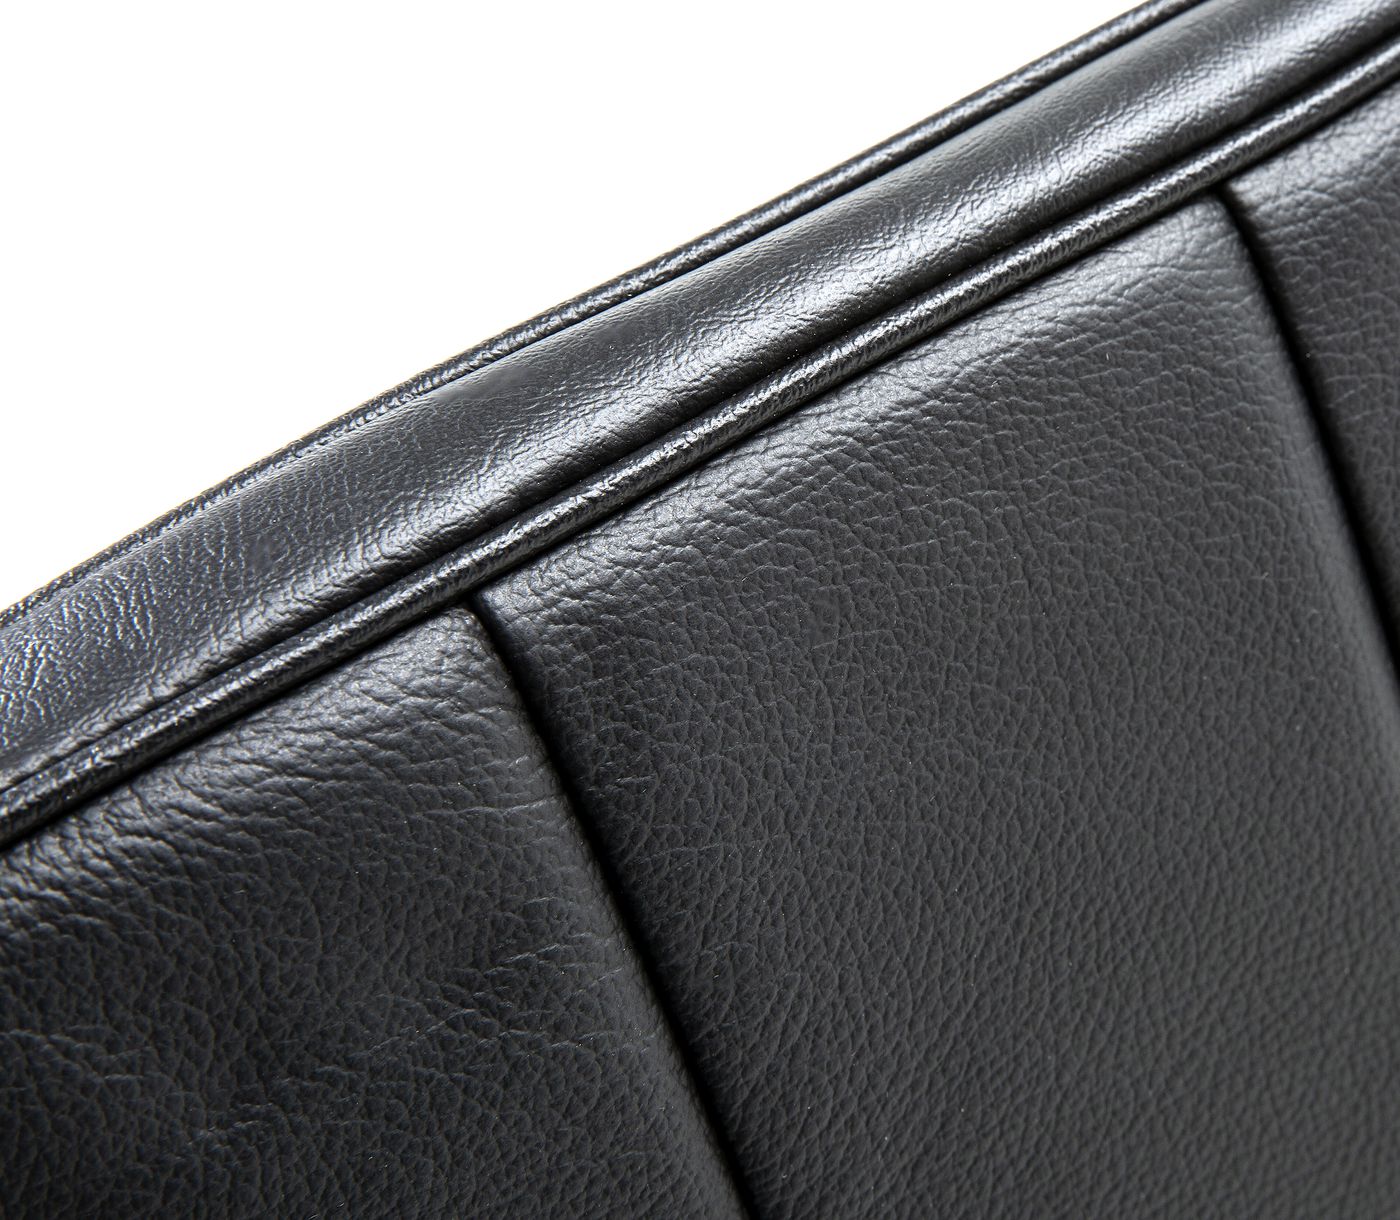 Lederrückenlehne
Leather back panel